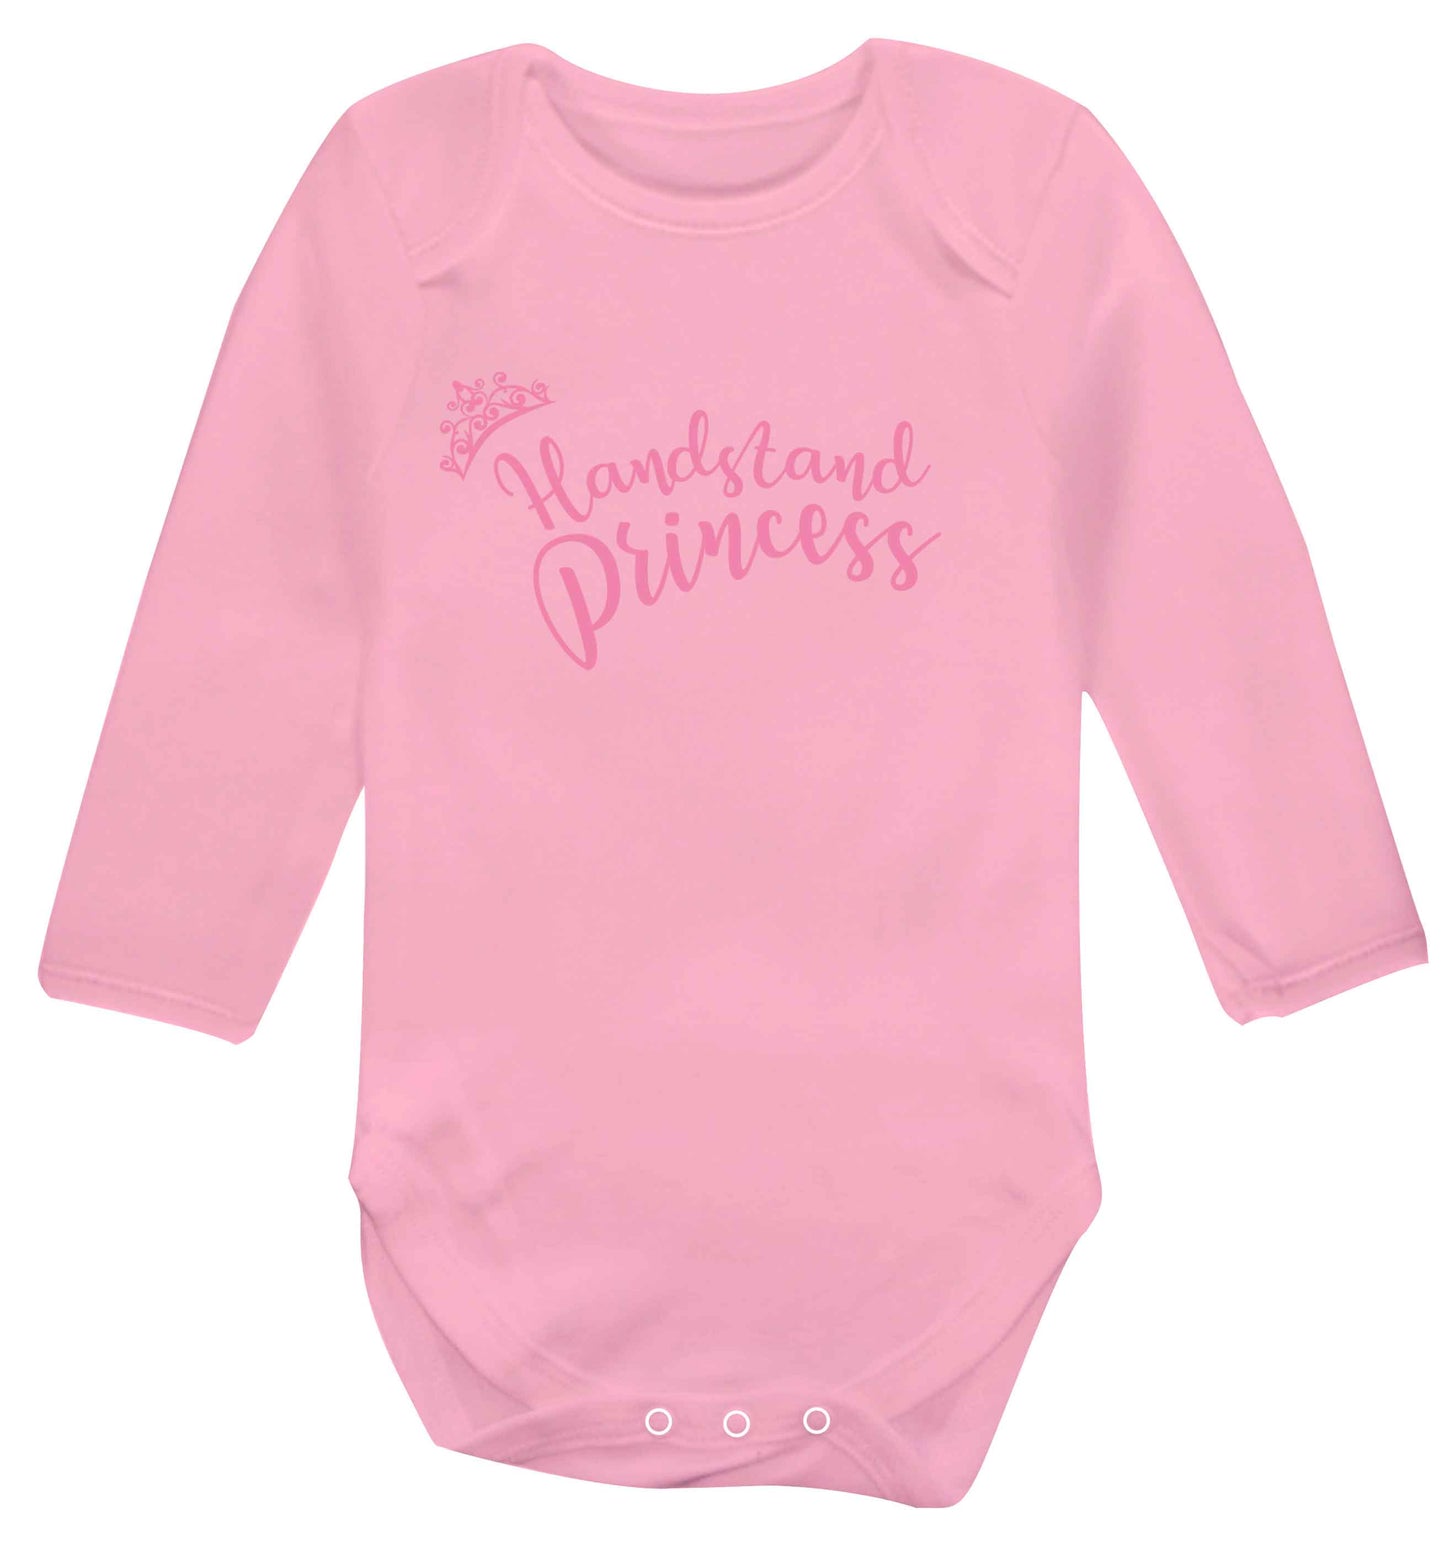 Handstand princess Baby Vest long sleeved pale pink 6-12 months